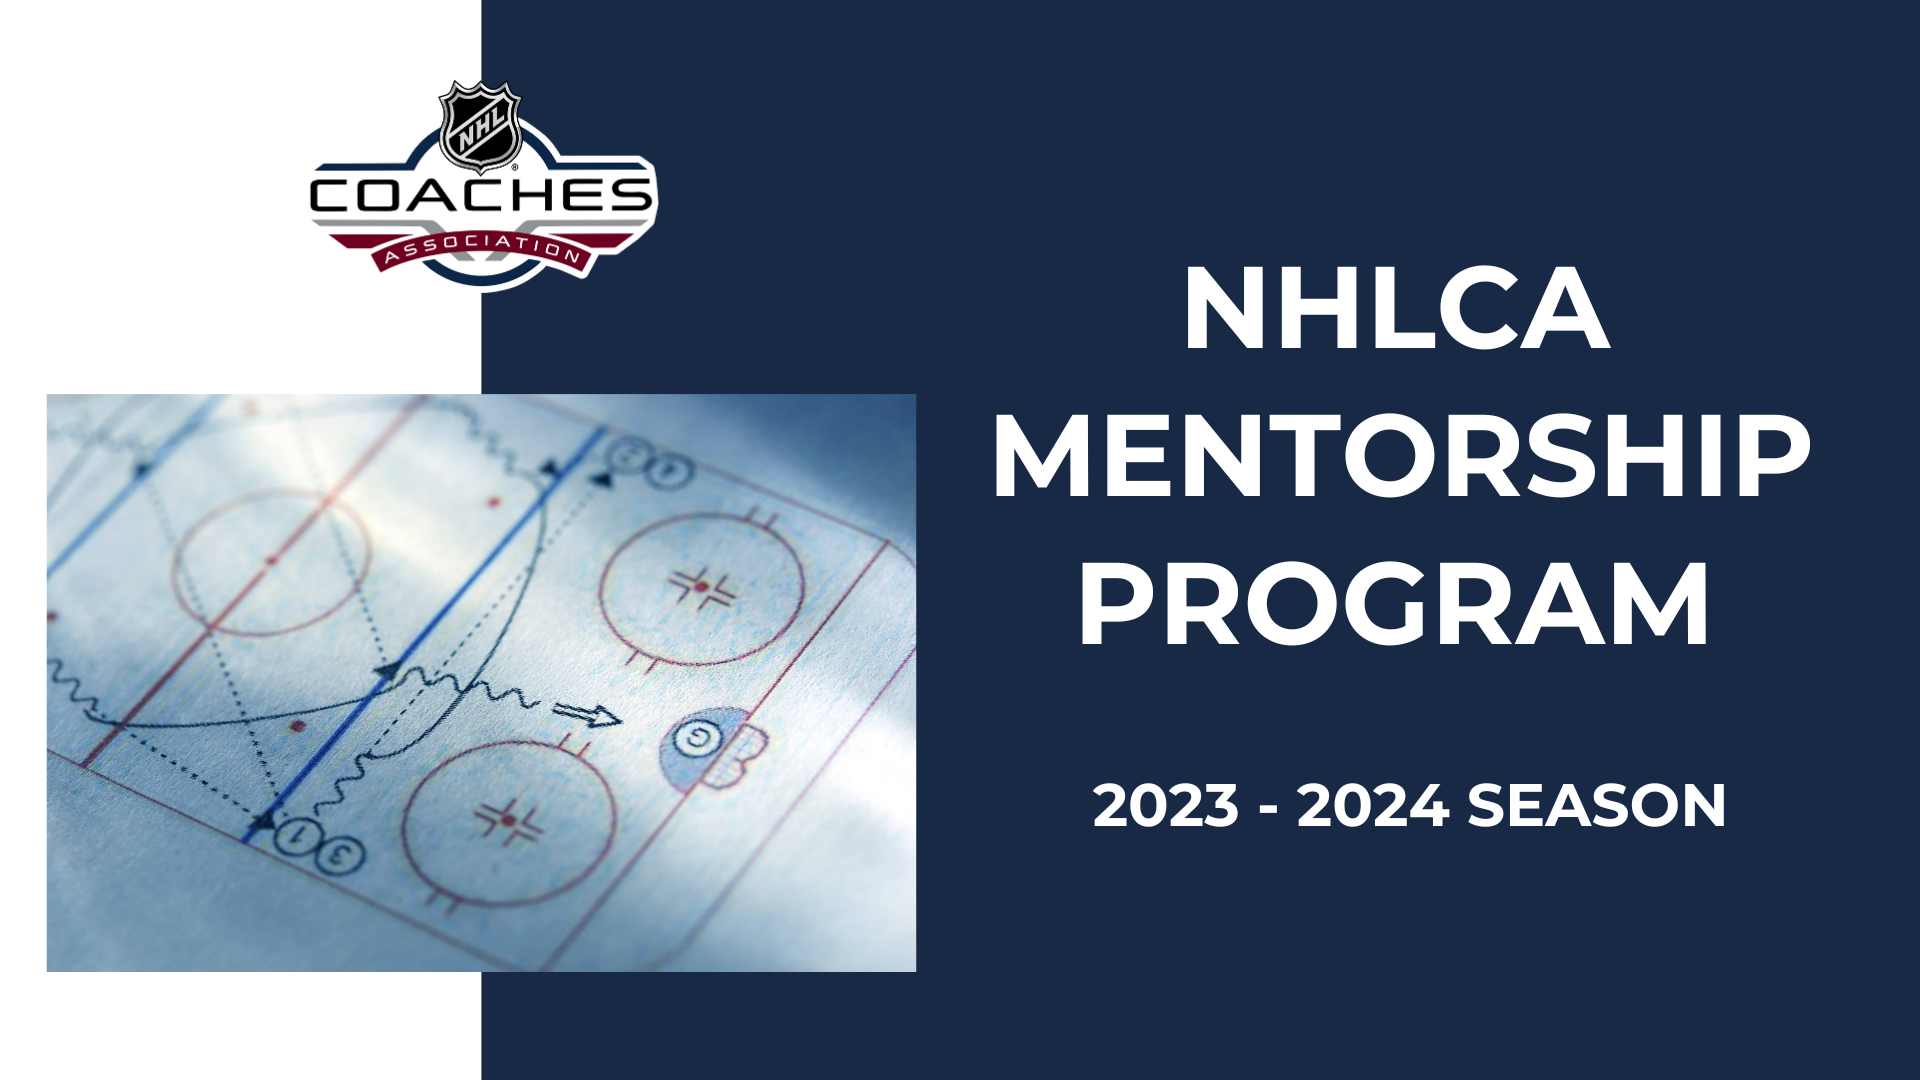 NHLCA Mentorship Program: 2023-2024 Season